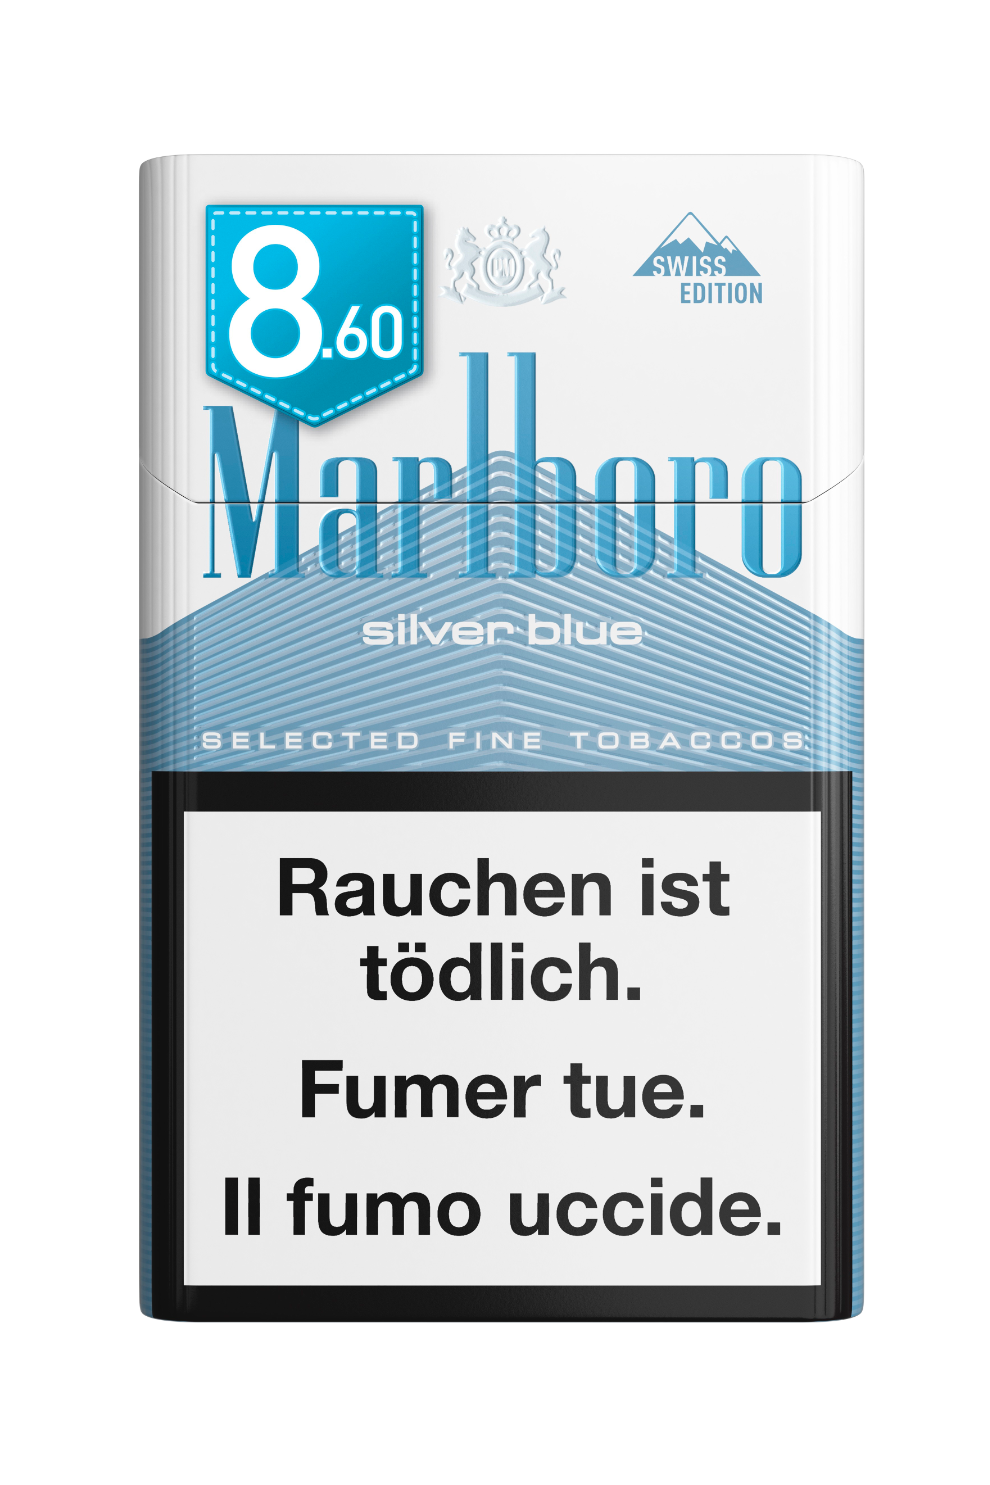 Marlboro Silver Swiss Edition